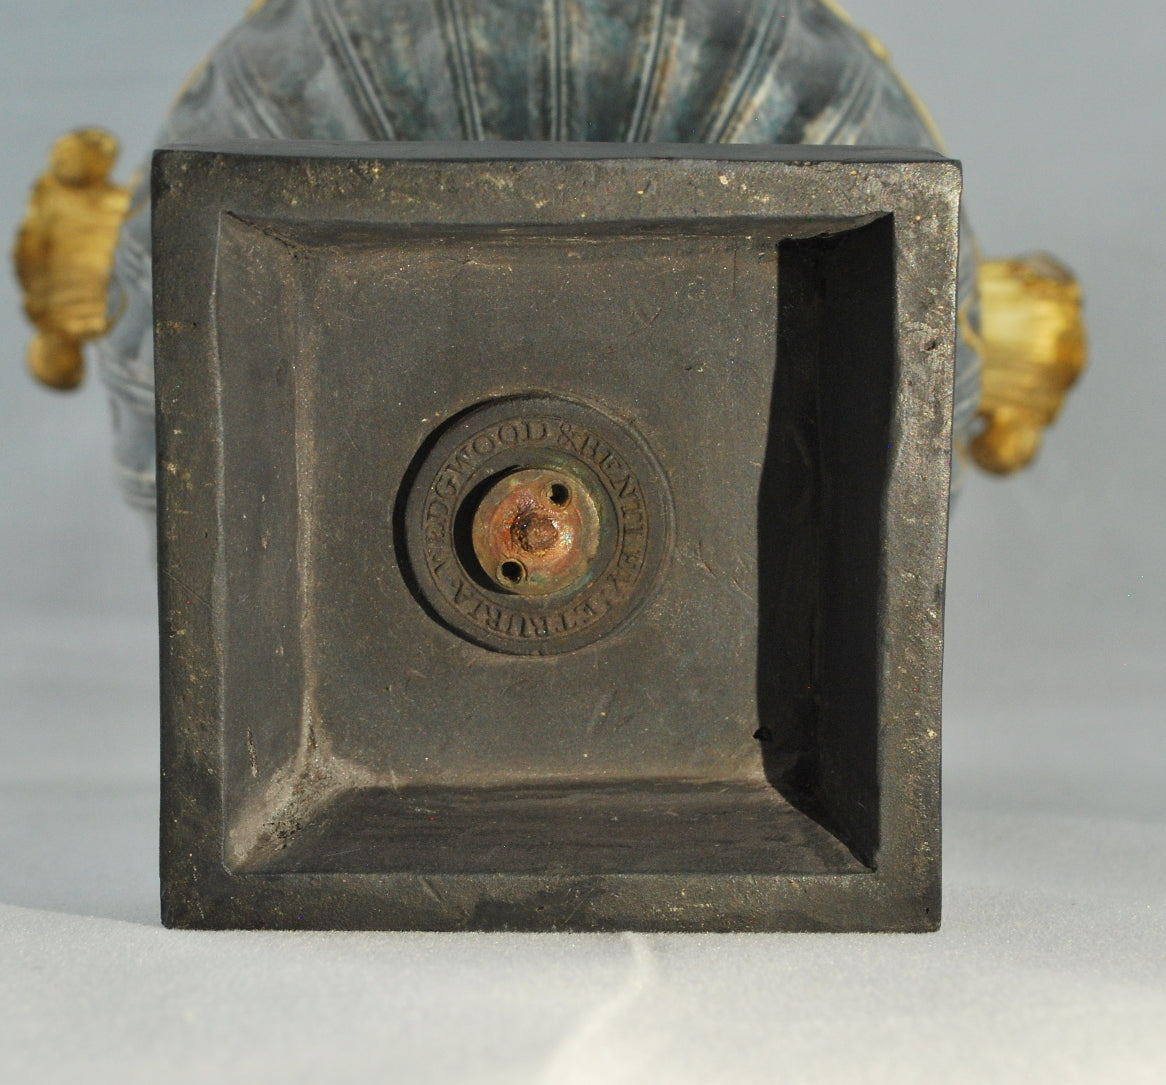 Shield-shaped vase, porphyry, gilt